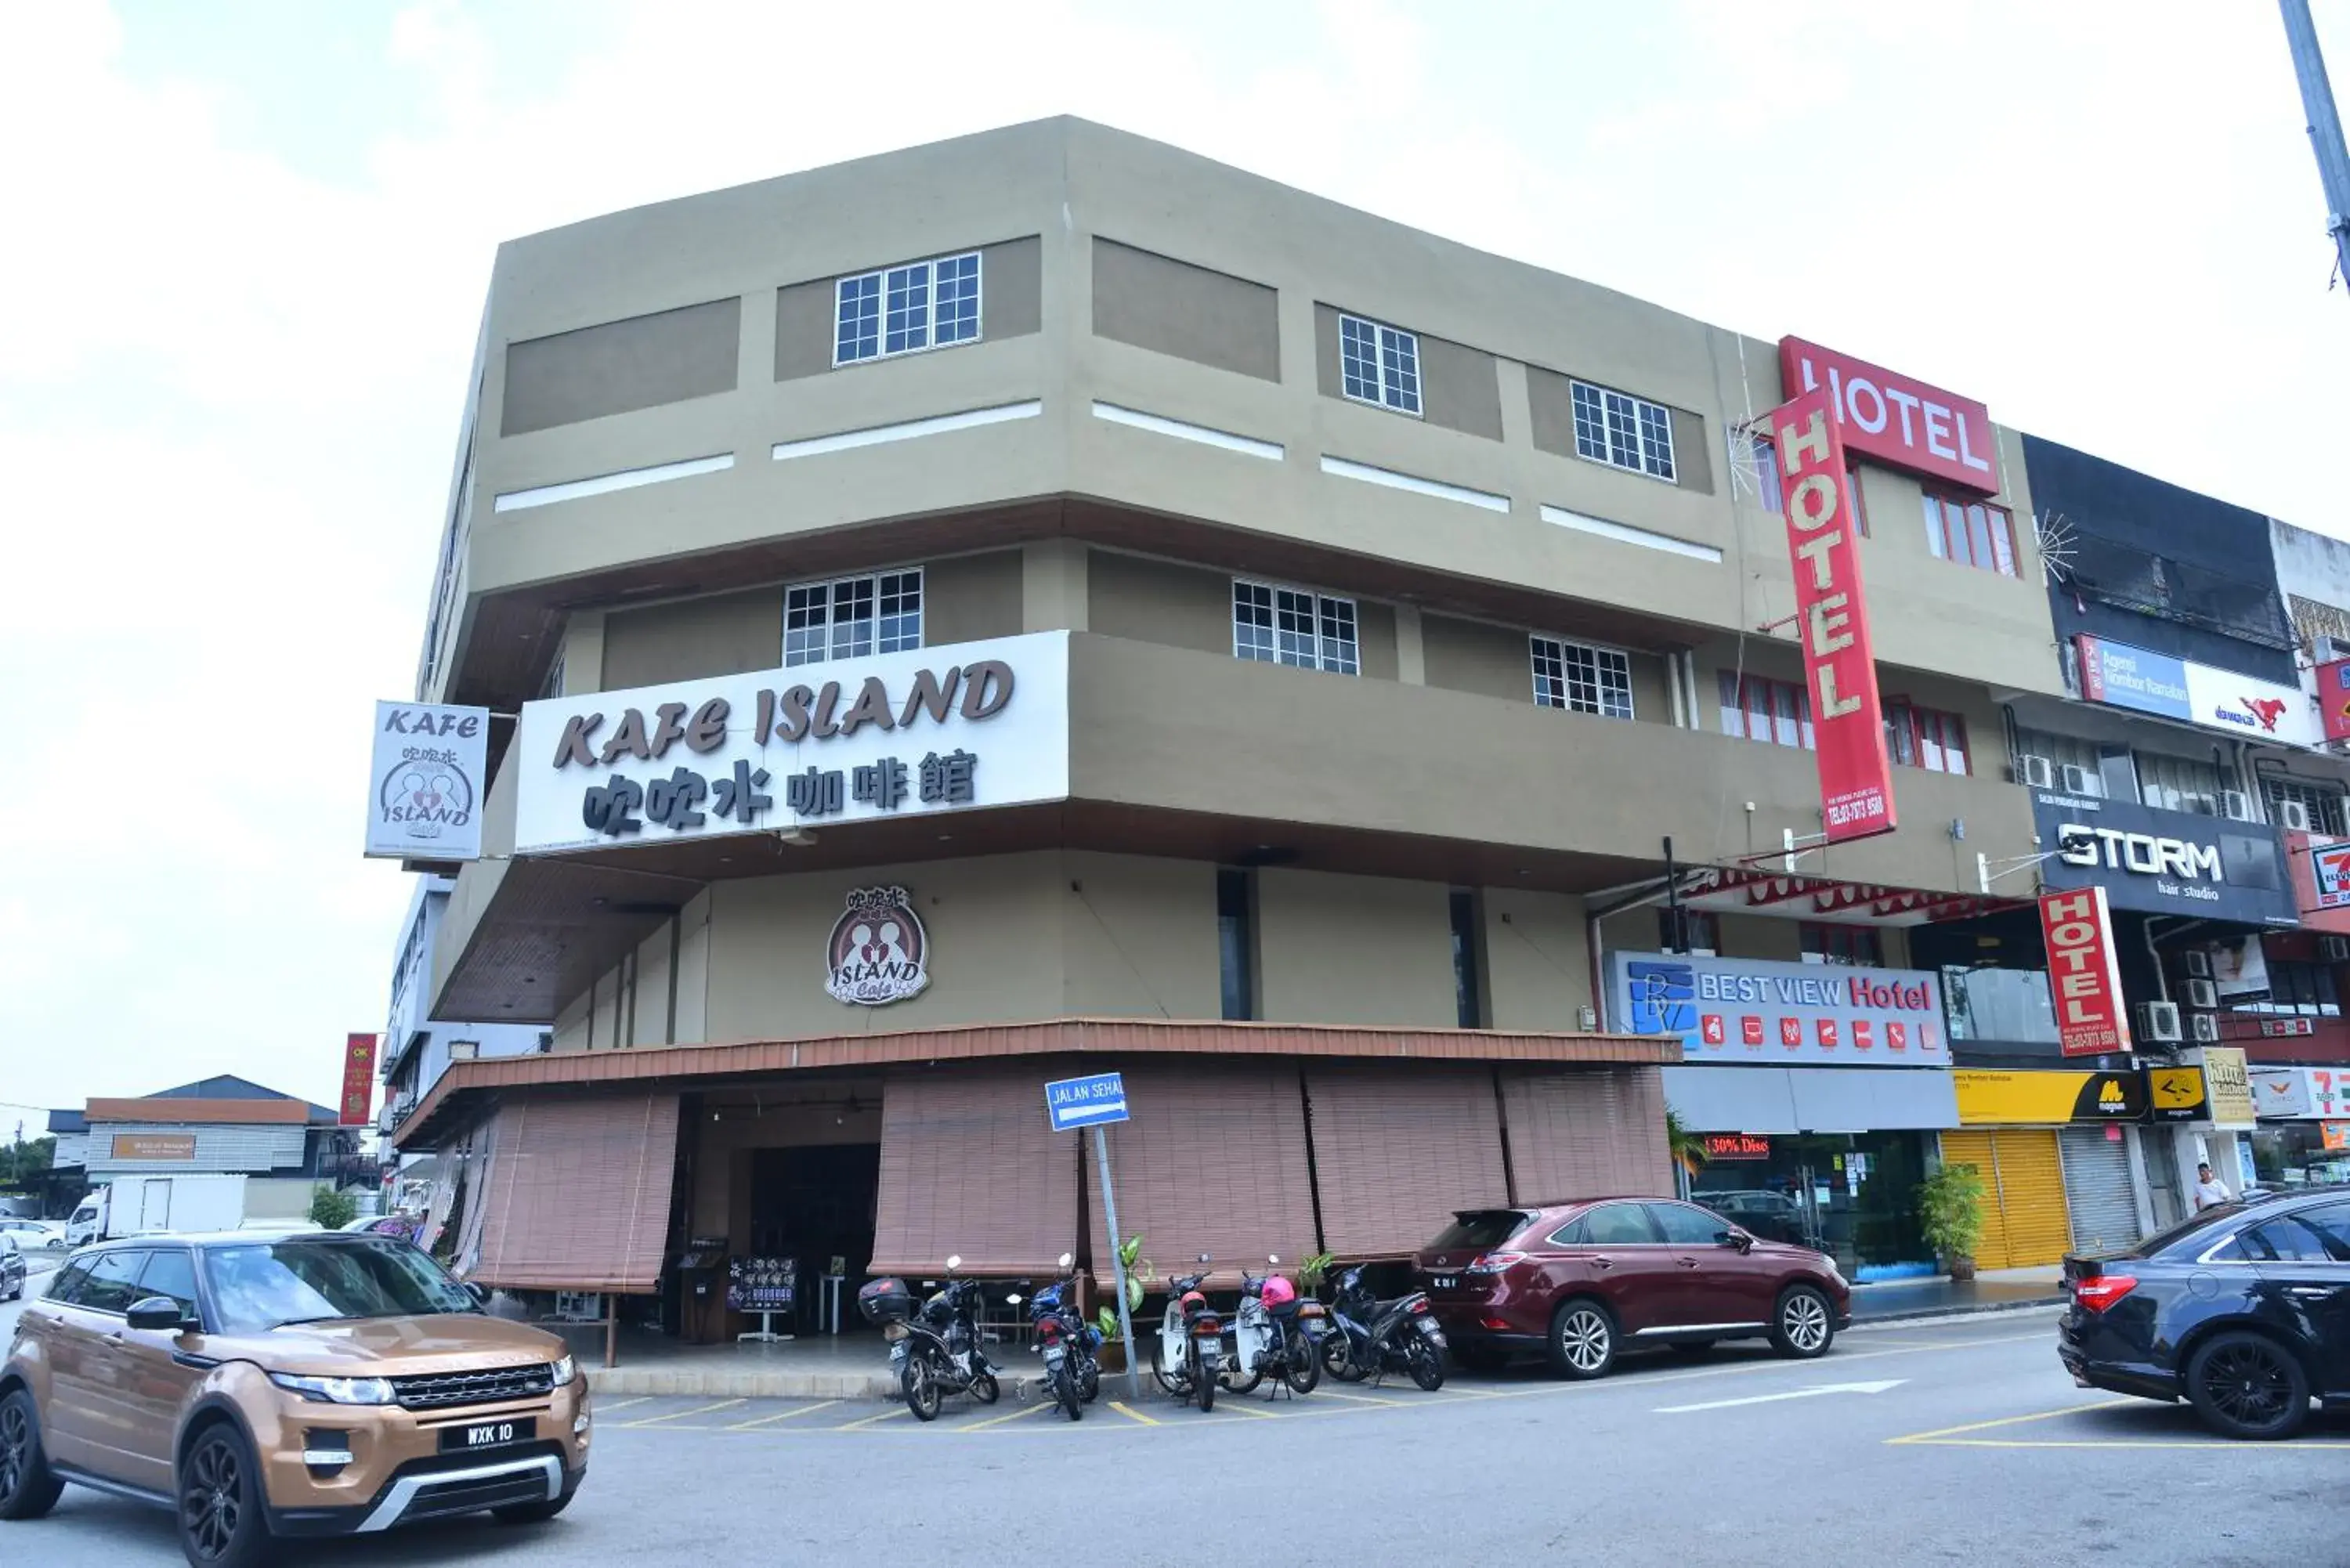 Property Building in Best View Hotel Ss2 Petaling Jaya